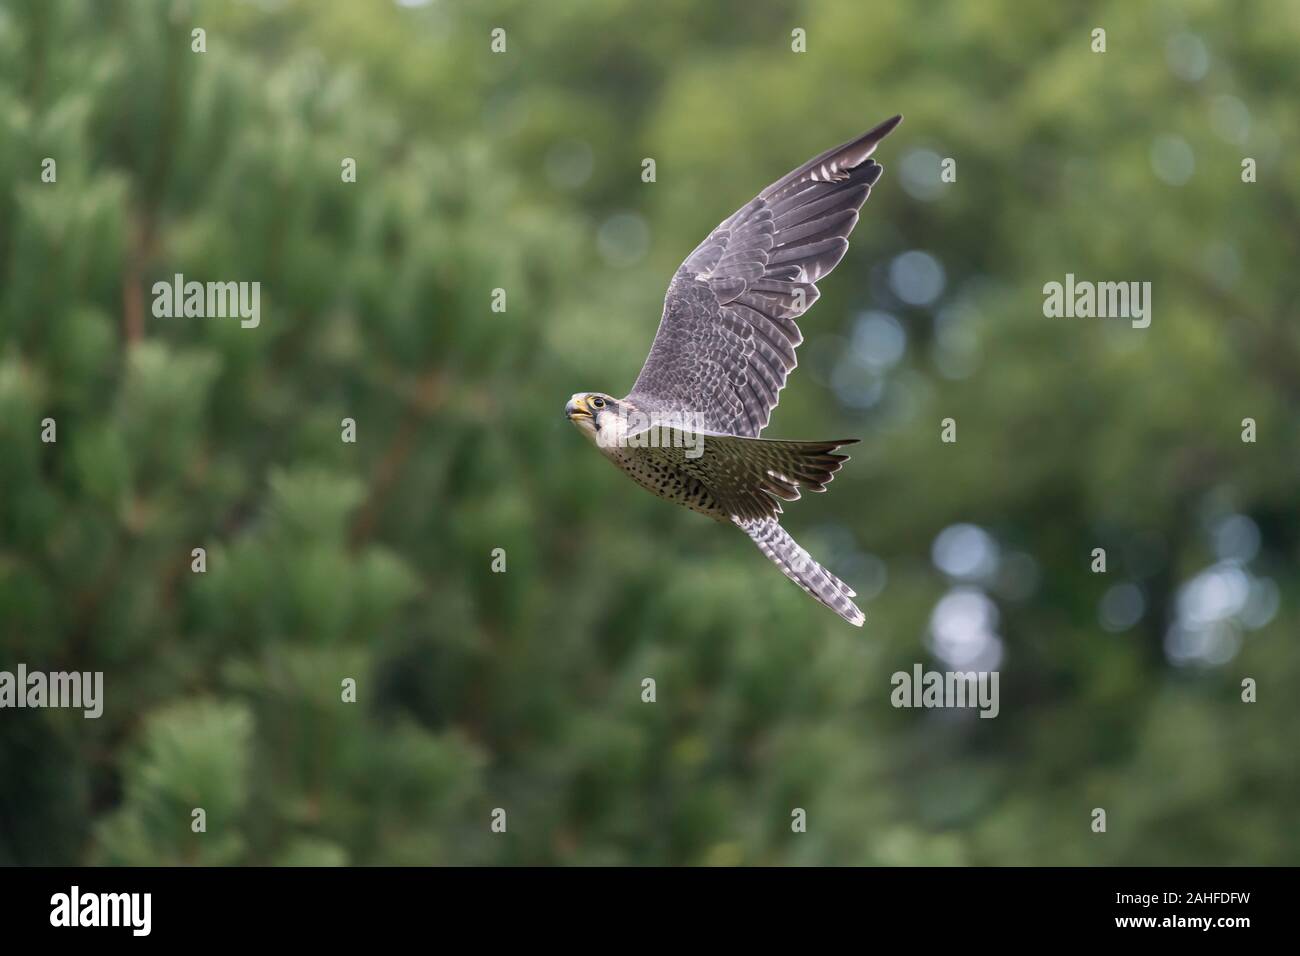 Lannerfalke im Flug, Falco biarmicus, Lanner falcon flying Stock Photo